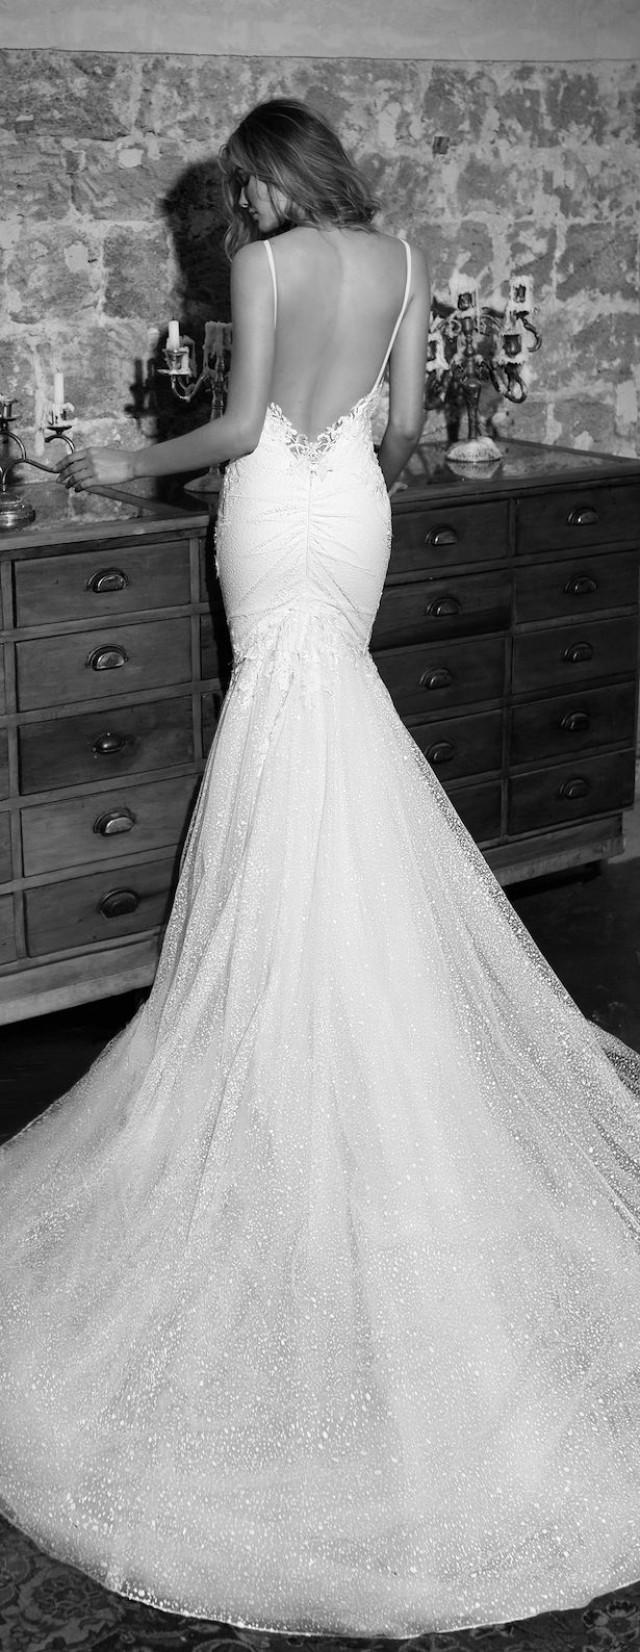 Dress - 51 Vintage Lace Backless Wedding Dresses #2800664 - Weddbook